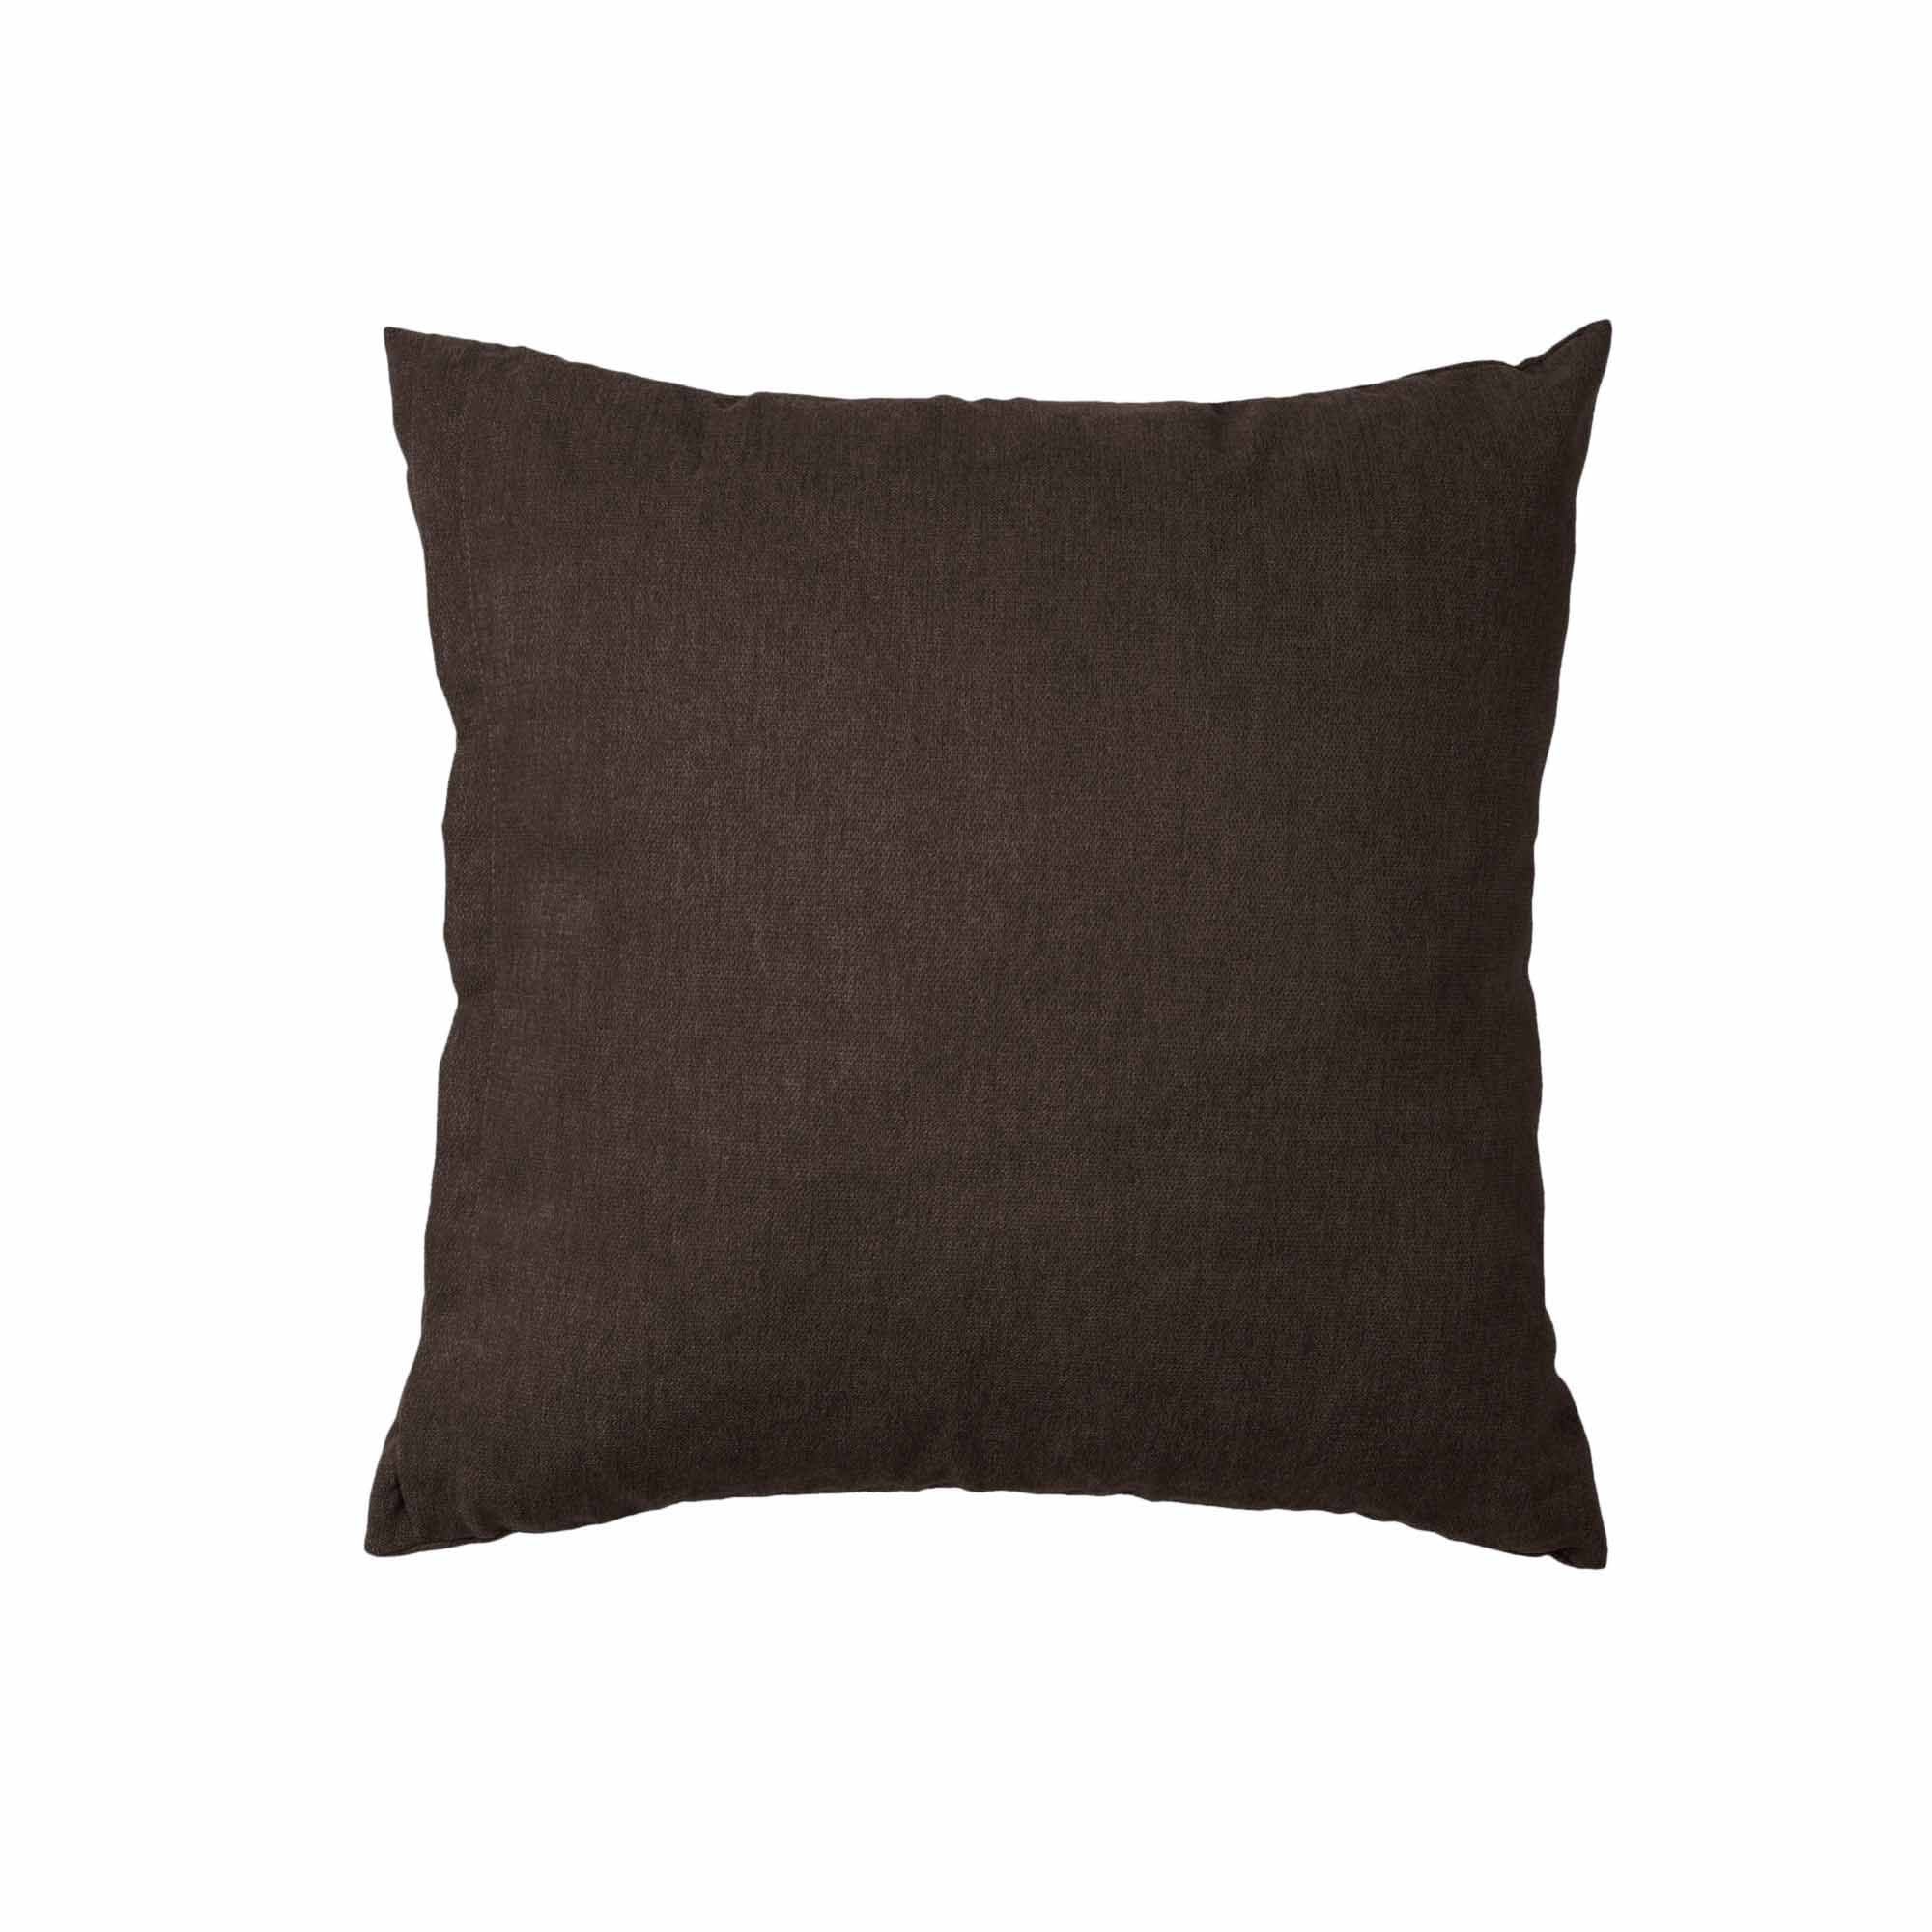 KISSEN Indoor Cushion, brown fabric, front view